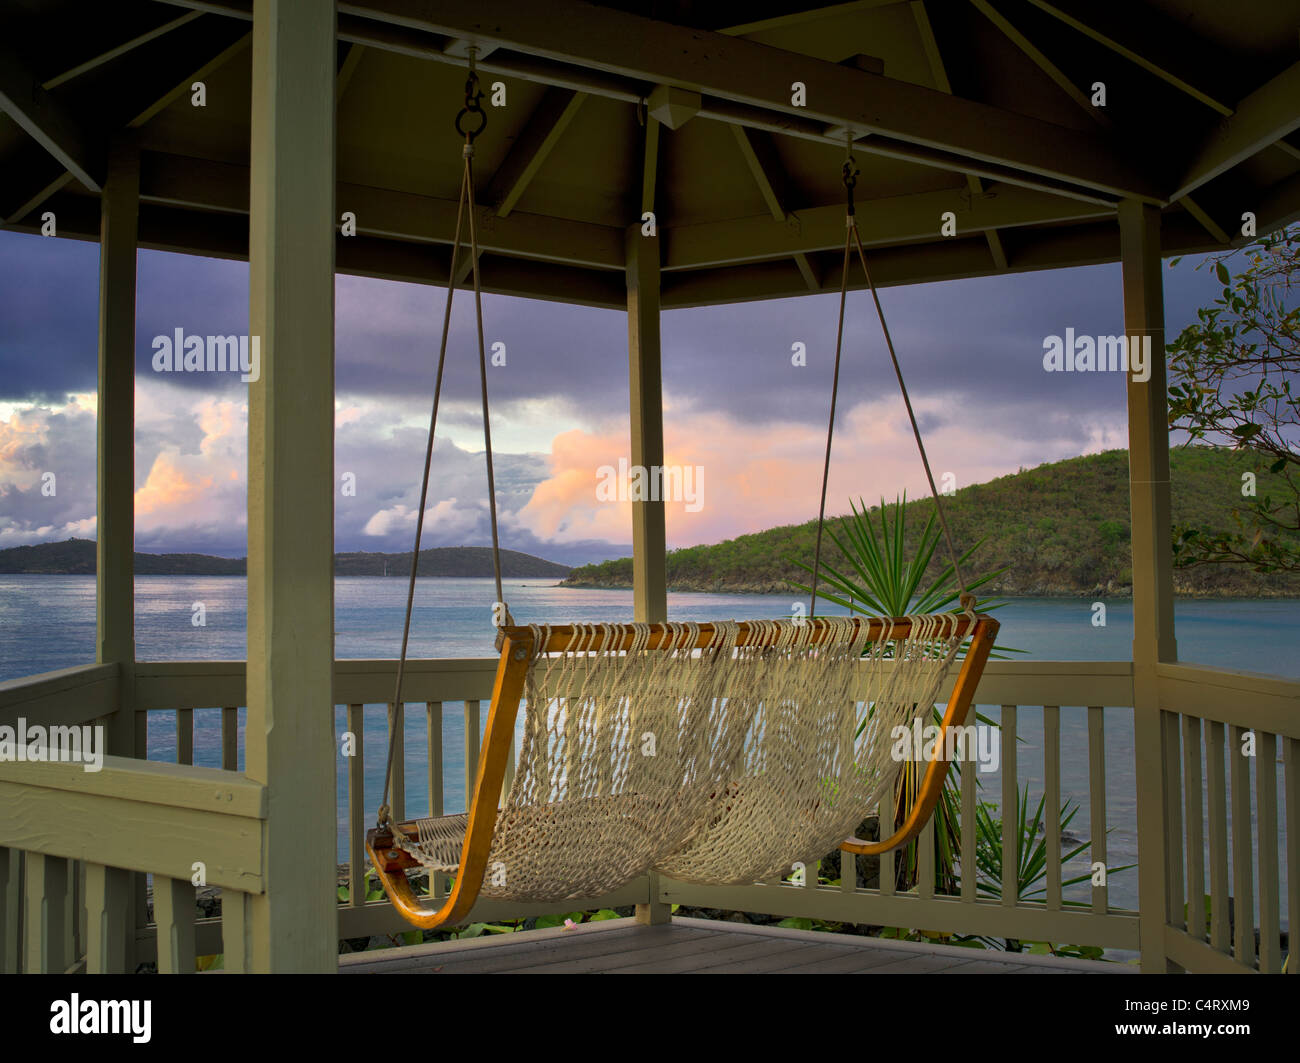 Sunrise with swing in gazebo. St. John, Virgin Islands. Stock Photo